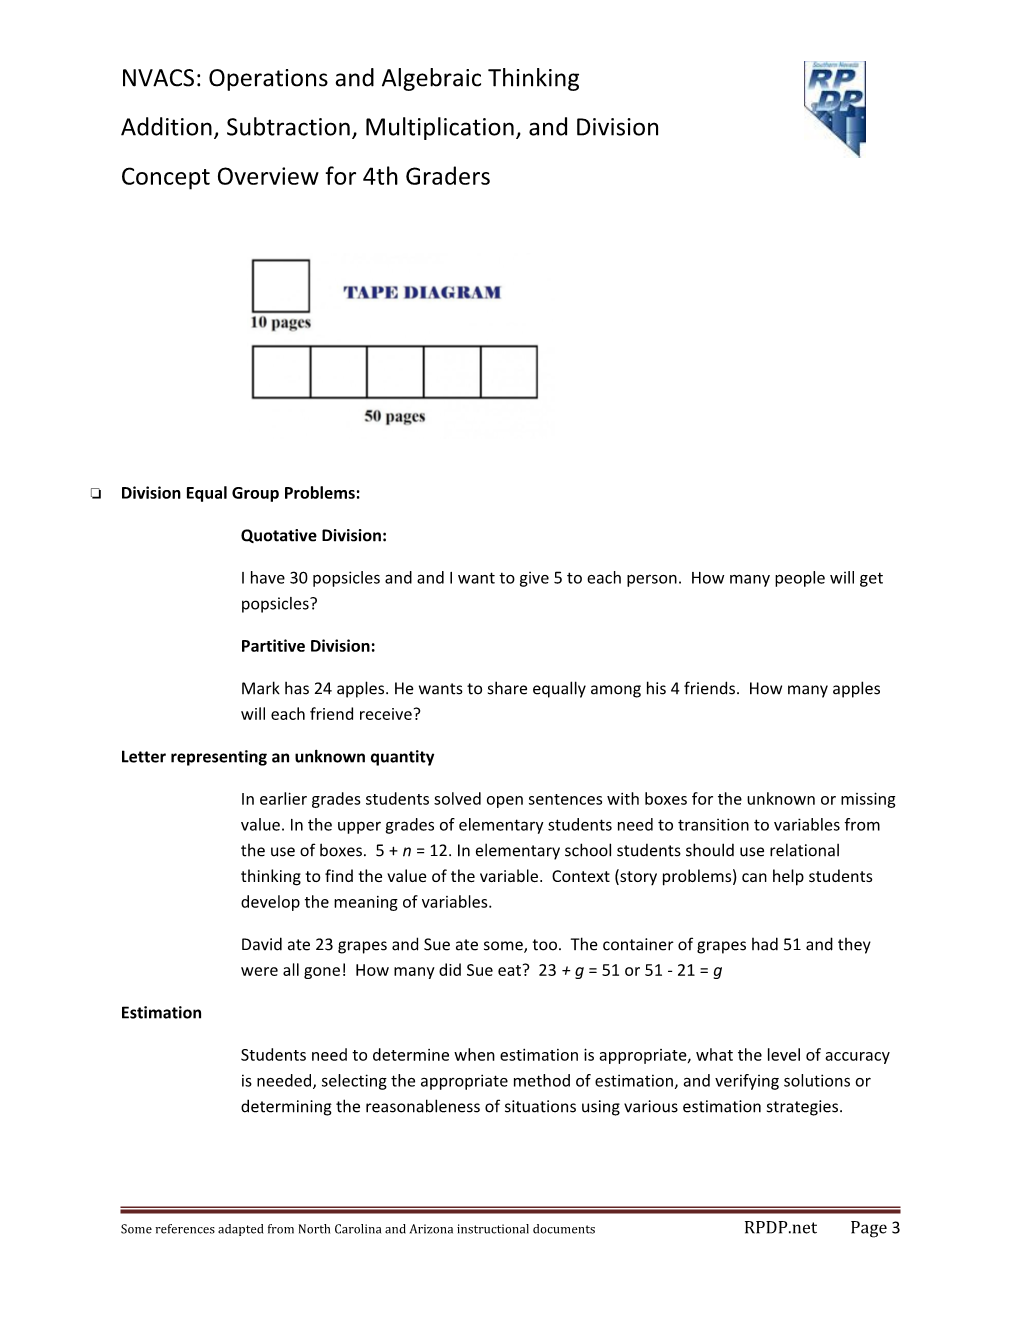 Concept Overview 4Th Grade NVACS Algebra